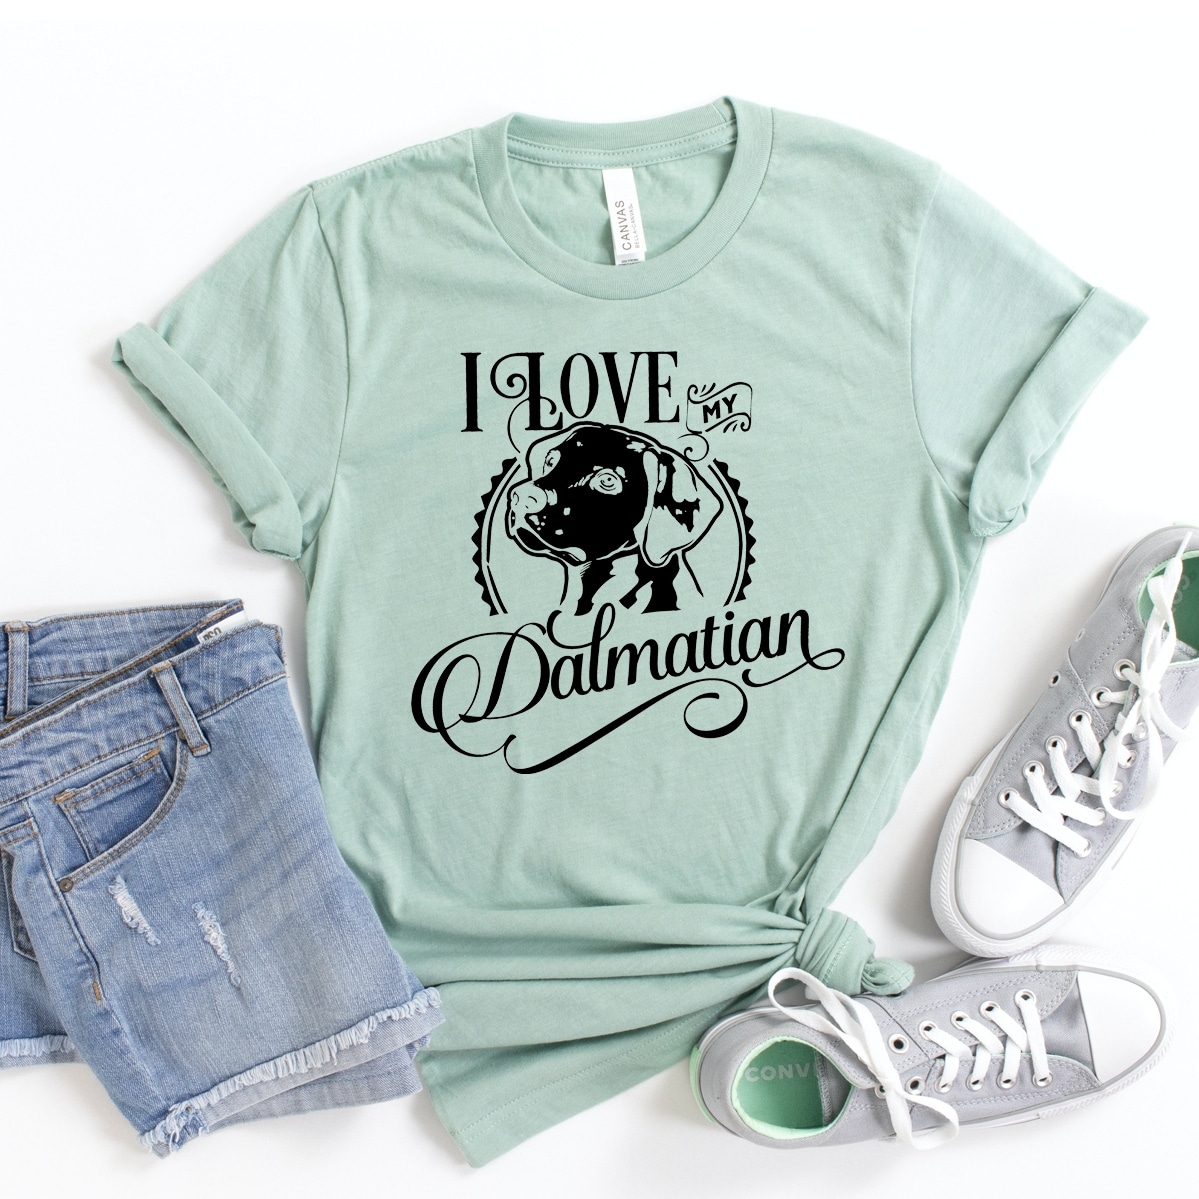 I Love My Dalmatian T-Shirt, Dog Rescue Shirt, Dog Adoption Tee, Dog Owner Gift, Women's Doggy Tshirt, Dog Lover Shirts,